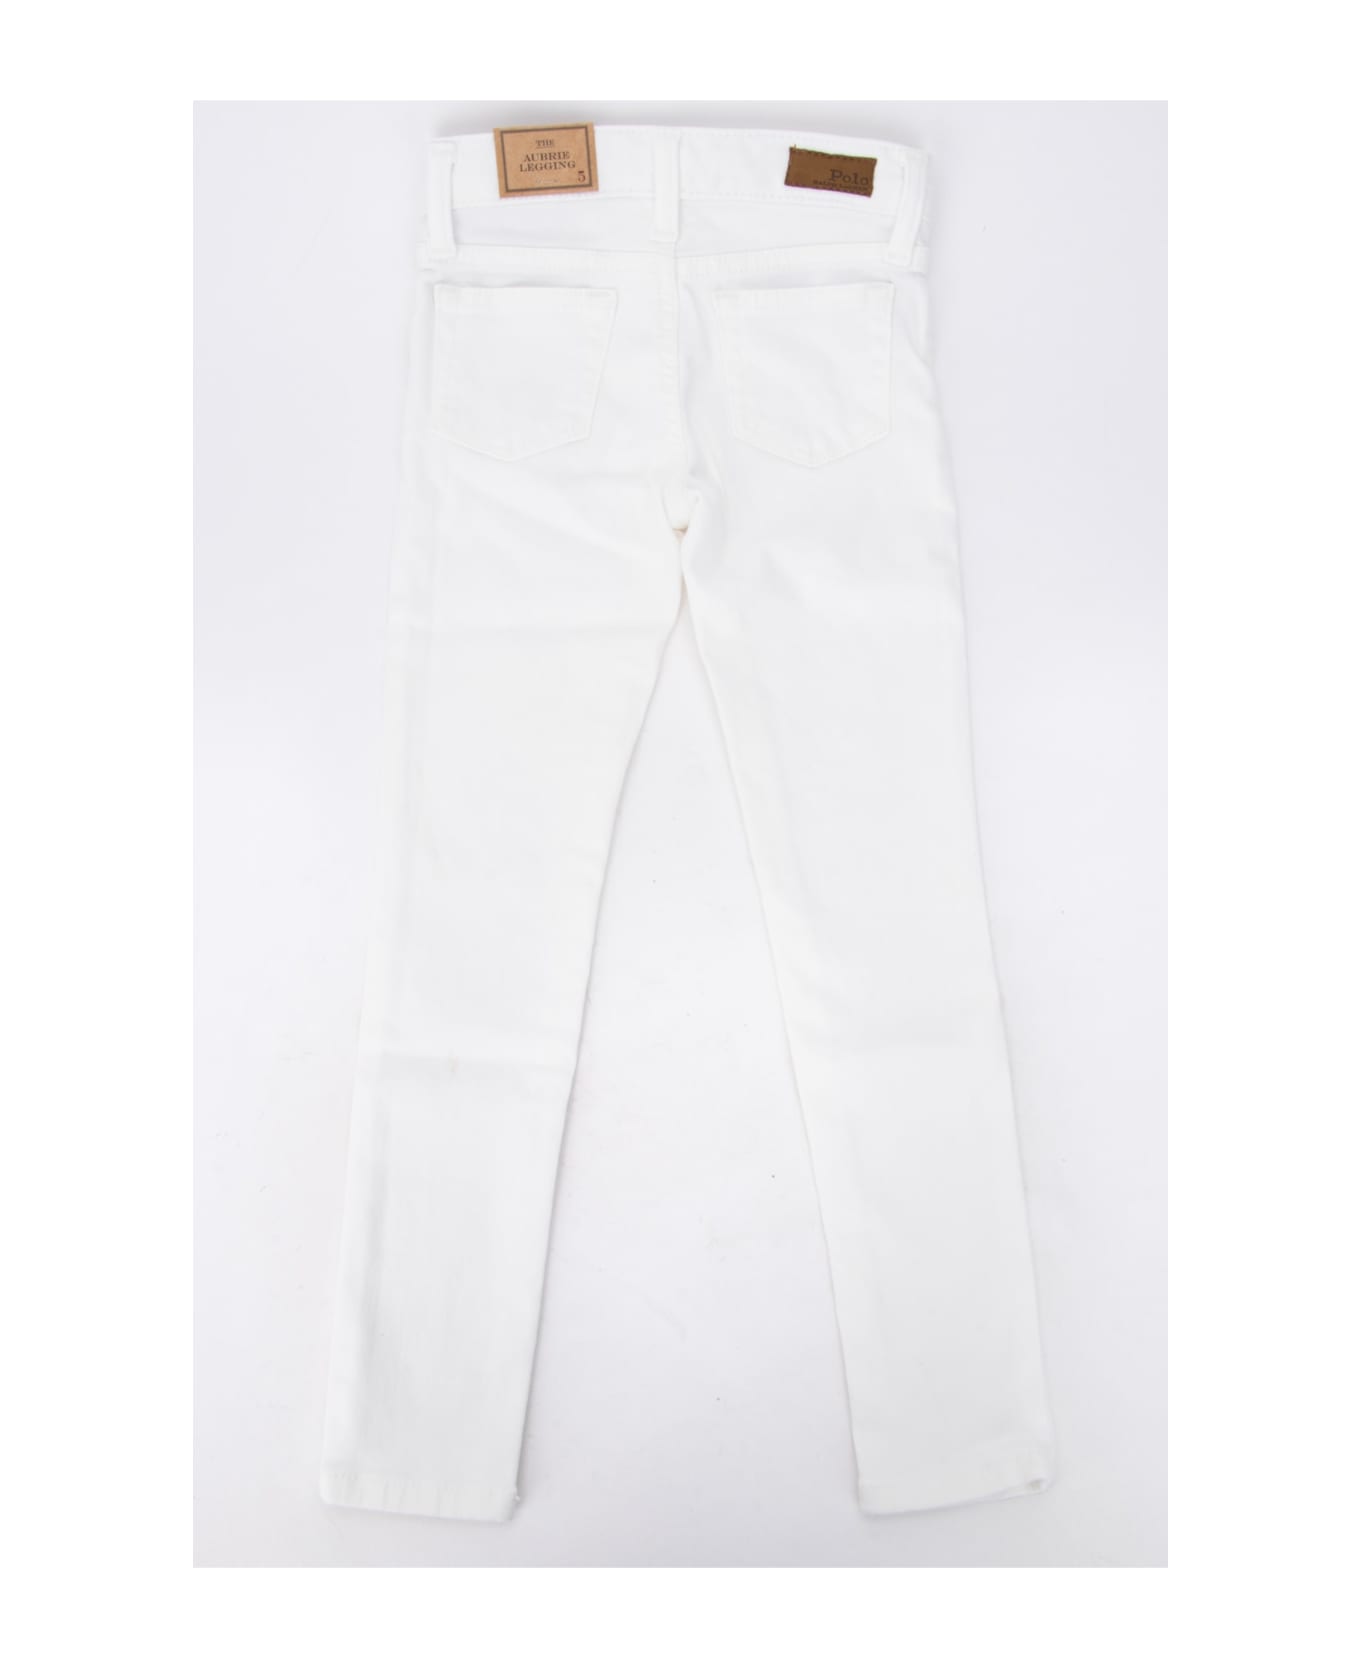 Polo Ralph Lauren Pantalone Jeans - 001 ボトムス